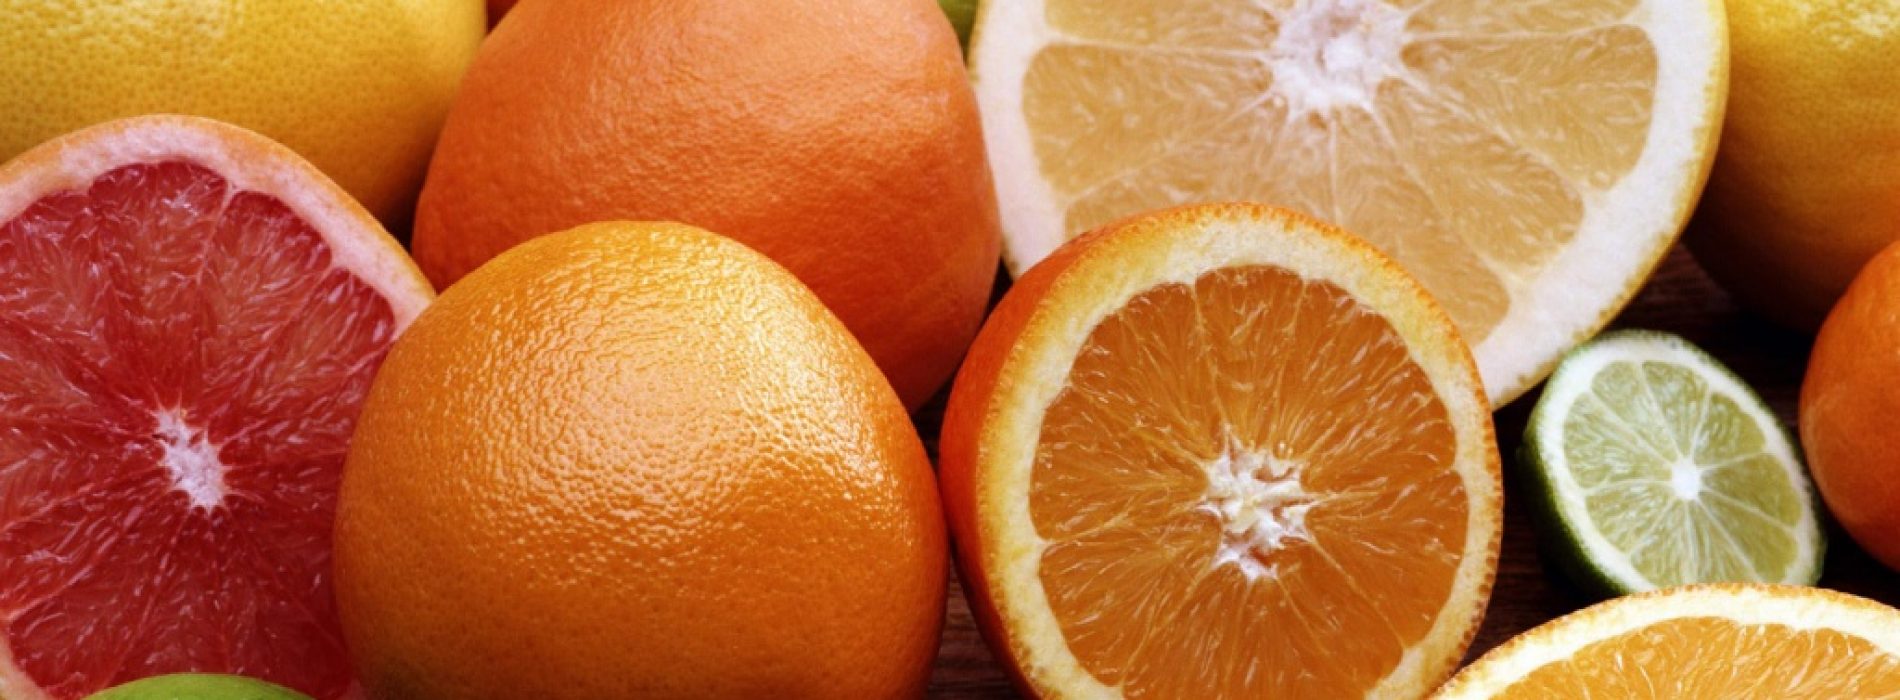 Bescherm jezelf tegen eierstokkanker met citrusvruchten